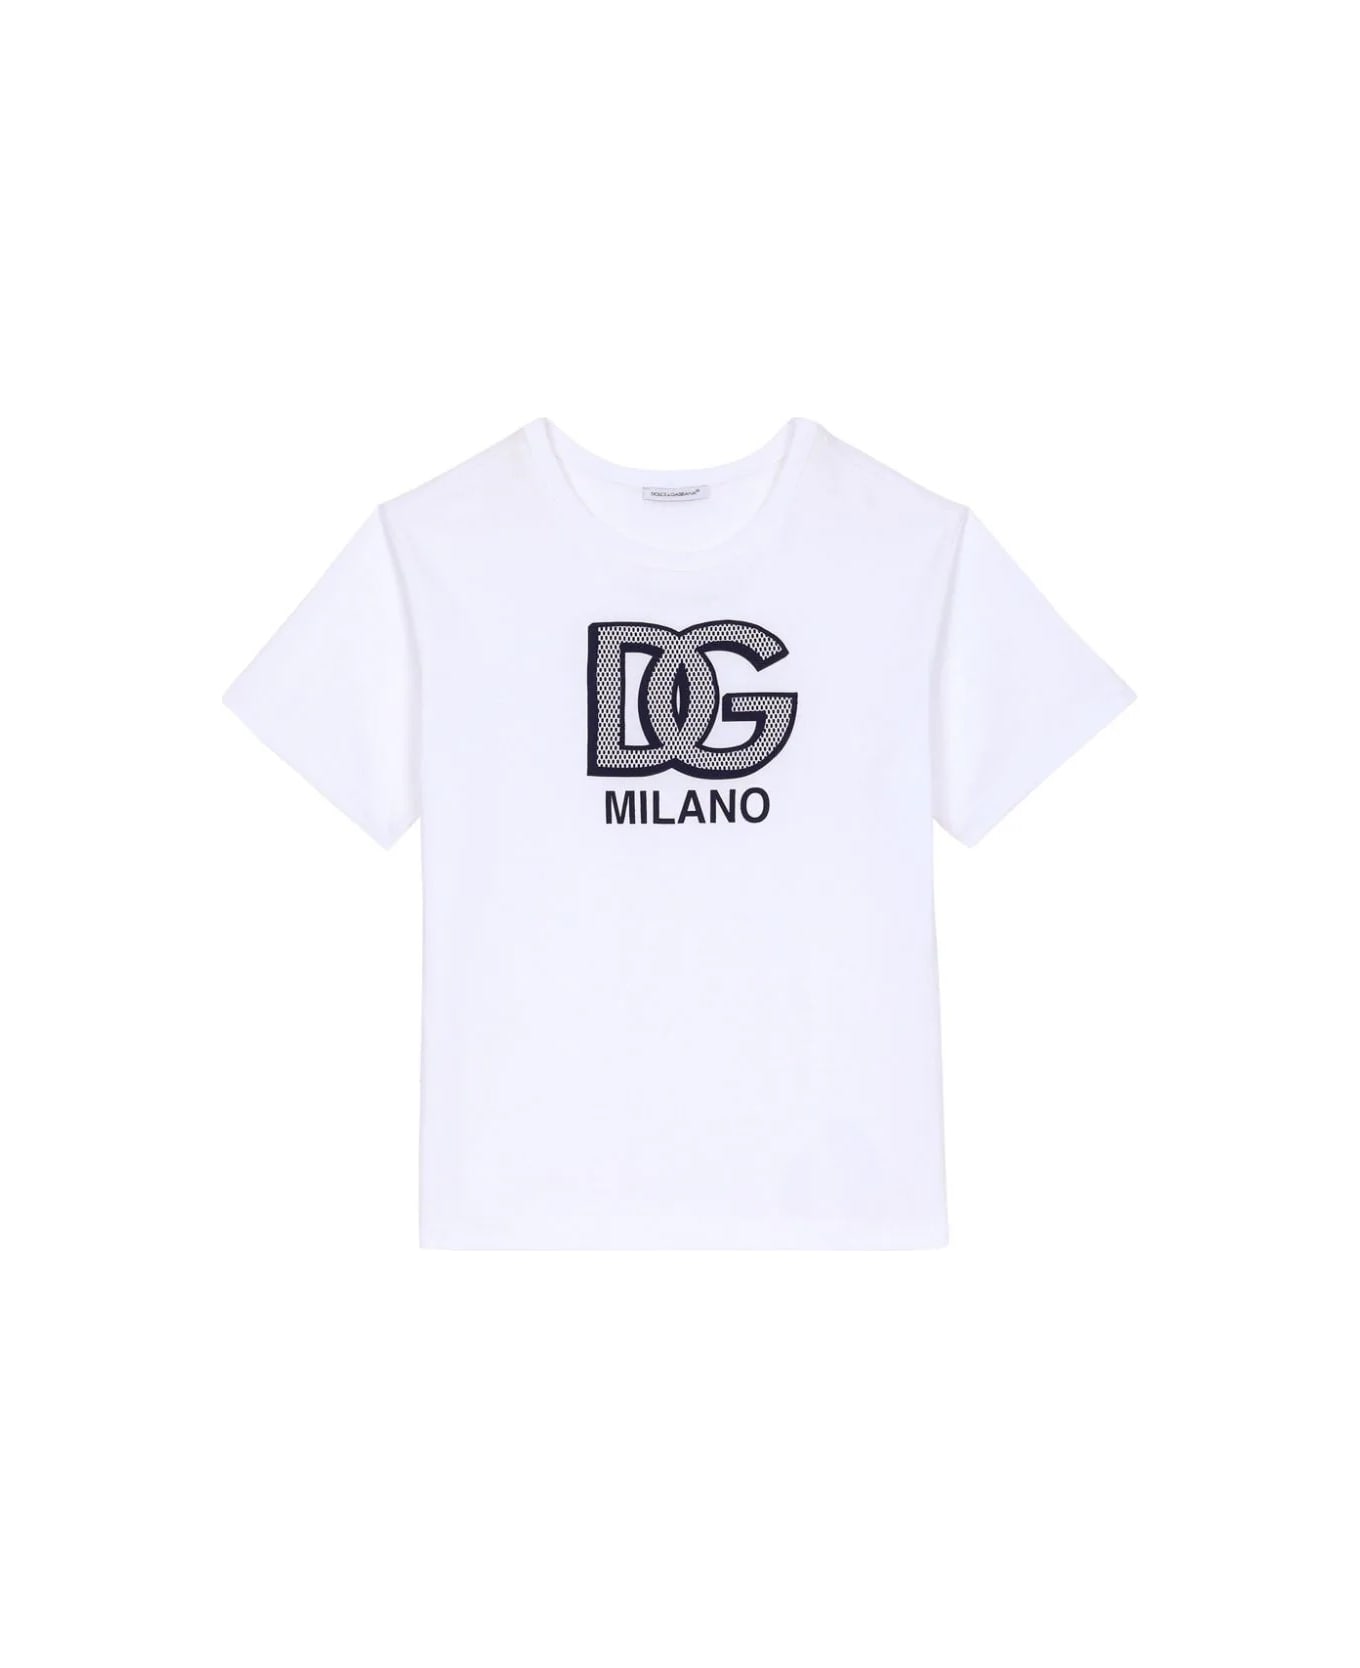 Dolce & Gabbana White T-shirt With Dg Milano Logo Print - White